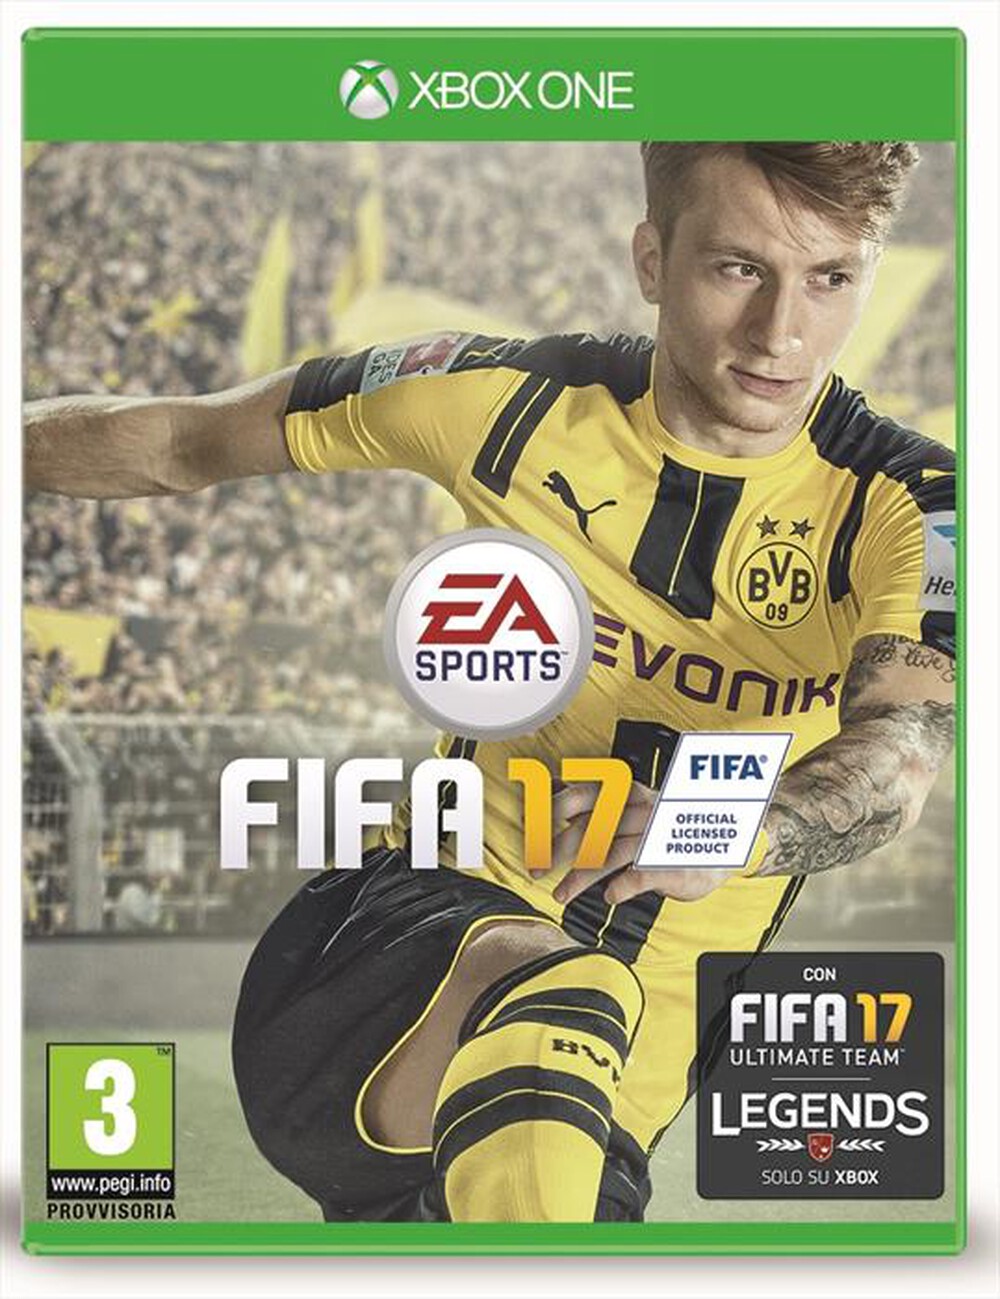 "ELECTRONIC ARTS - FIFA 17 Xbox One"